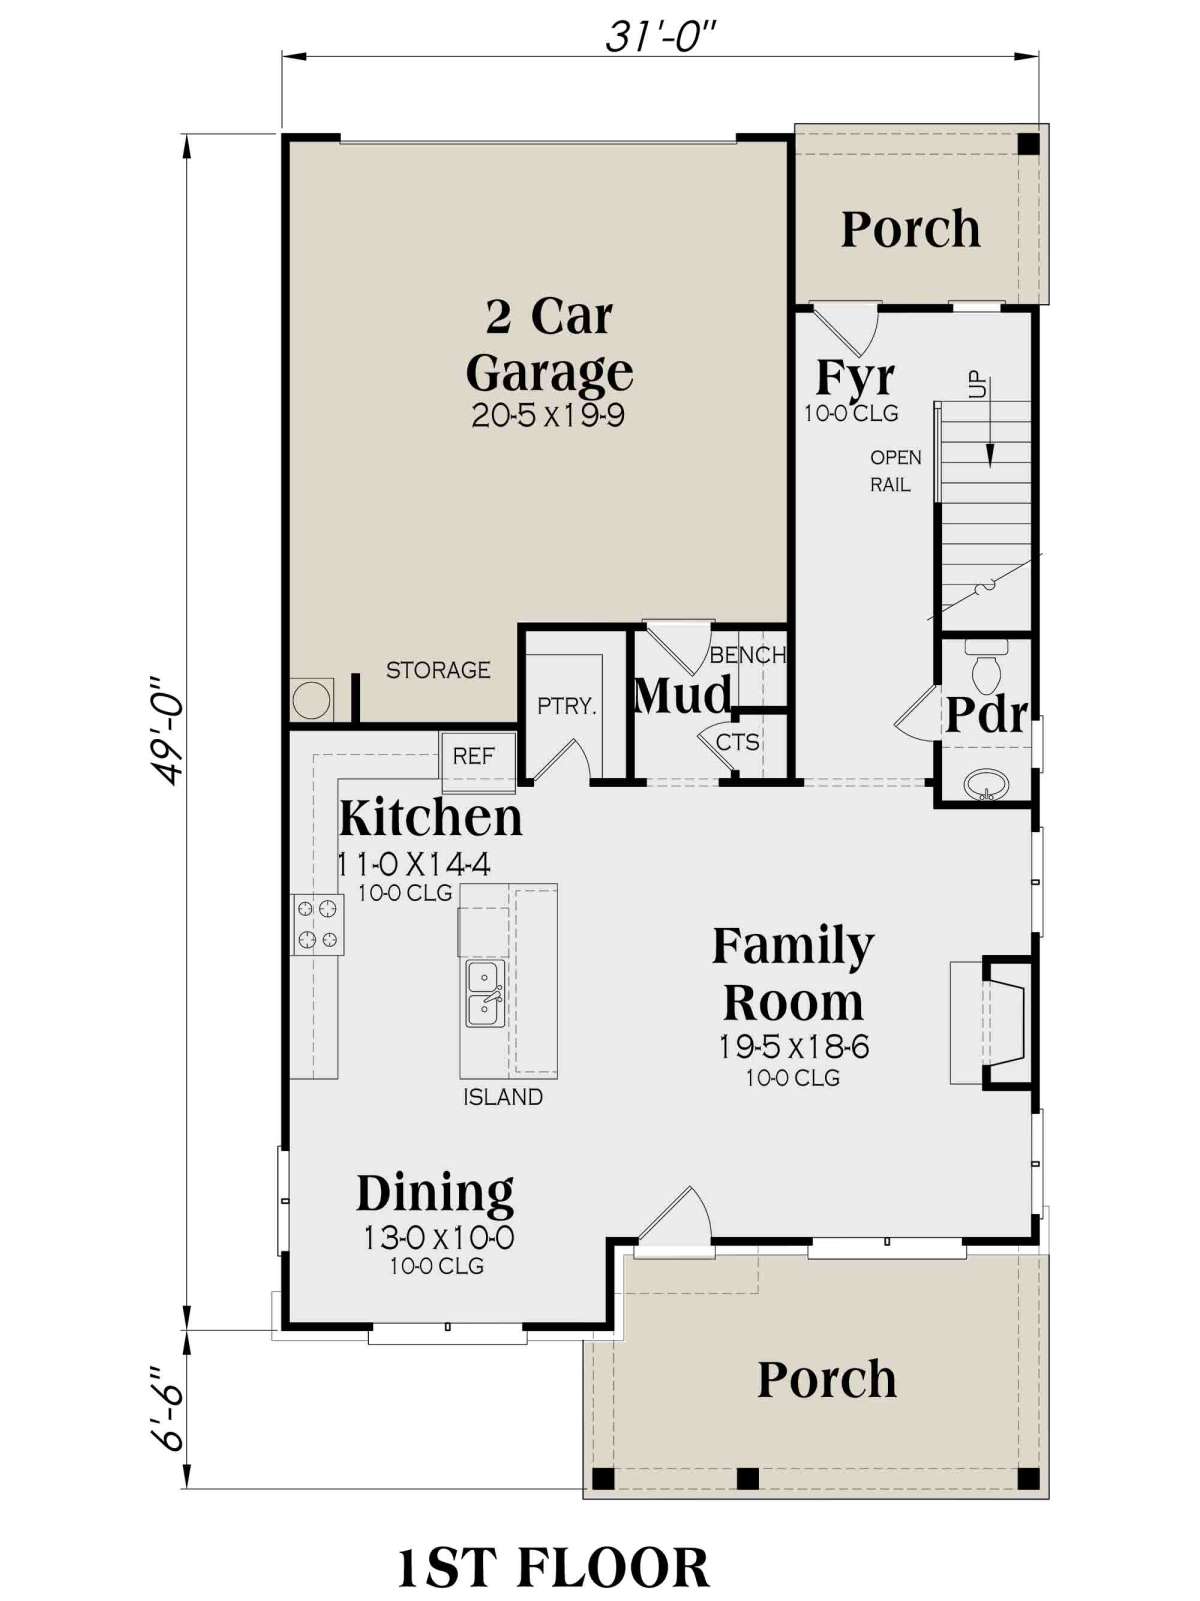 Modern Farmhouse Plan: 2,258 Square Feet, 3-4 Bedrooms, 2.5 Bathrooms ...